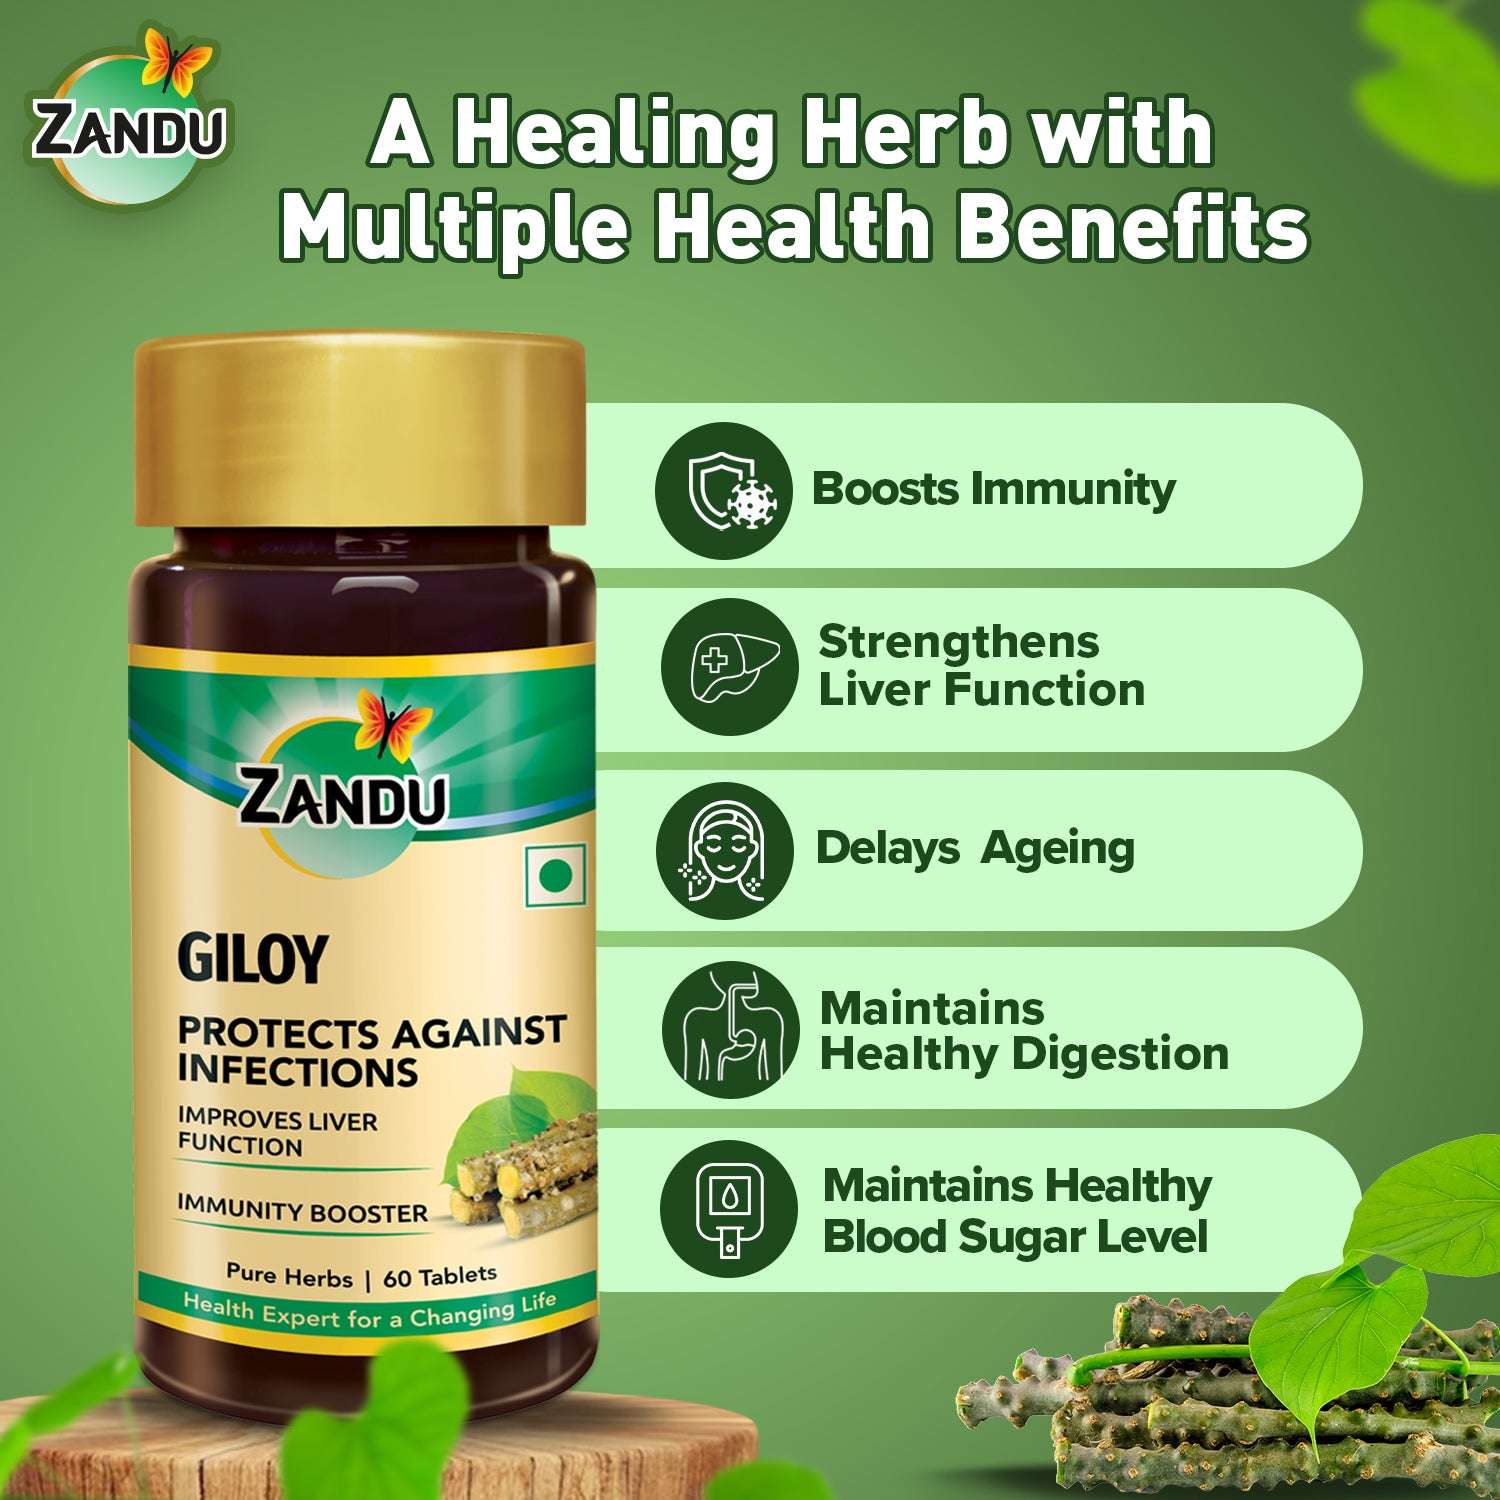 Zandu Giloy Tablet benefits